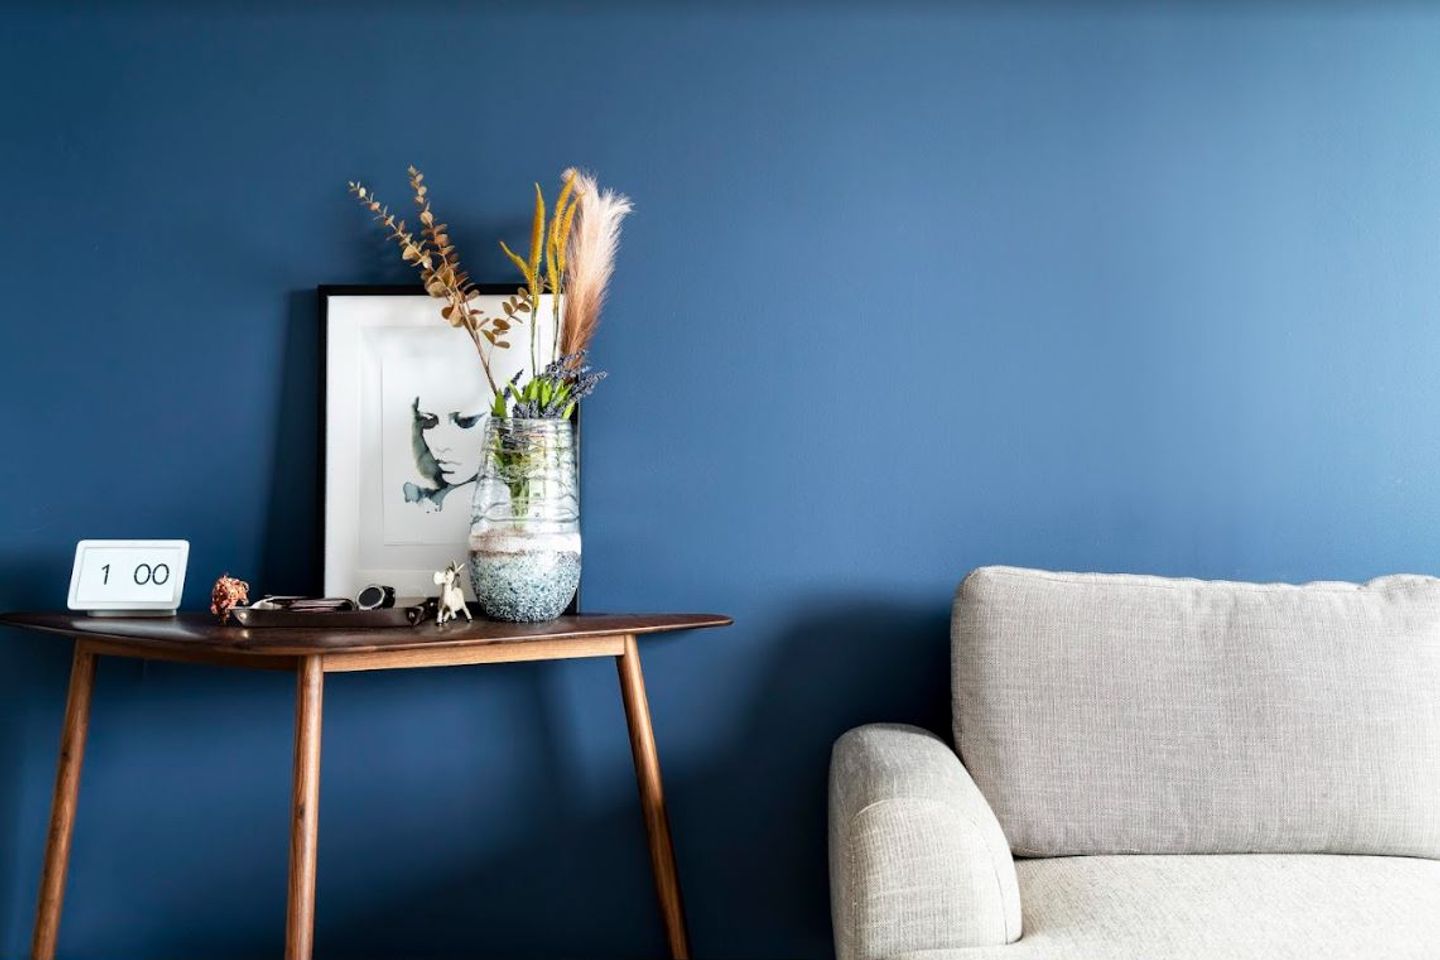 Royal Blue Wall Paint Interior Design - Livspace